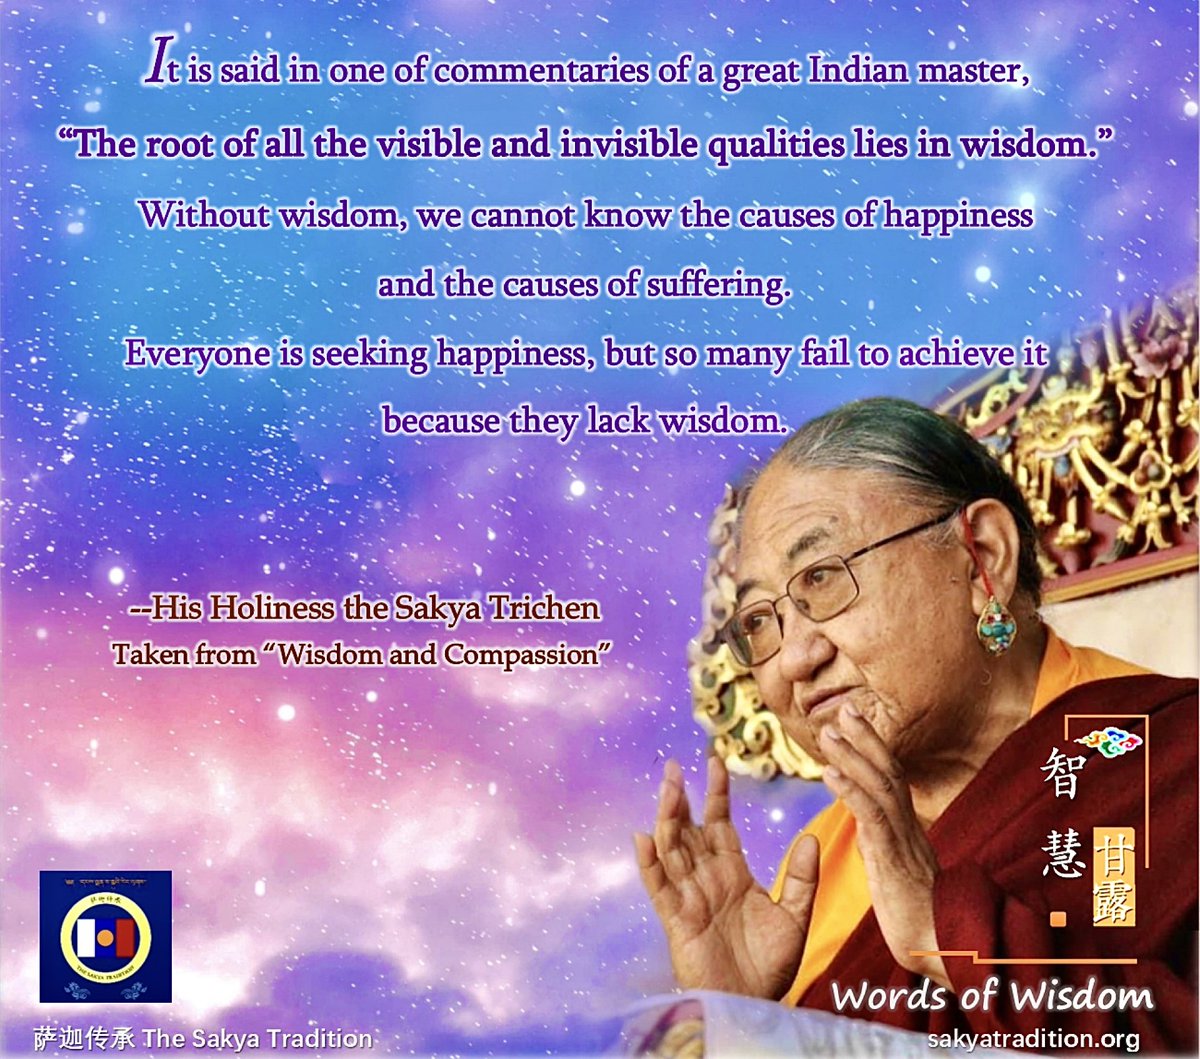 #WordsOfWisdom #sakya #sakyatrichen #Buddhism  #quotes #quotesaboutlife #quotesoftheday #Wisdom #HAPPINESS 

sakyatradition.org